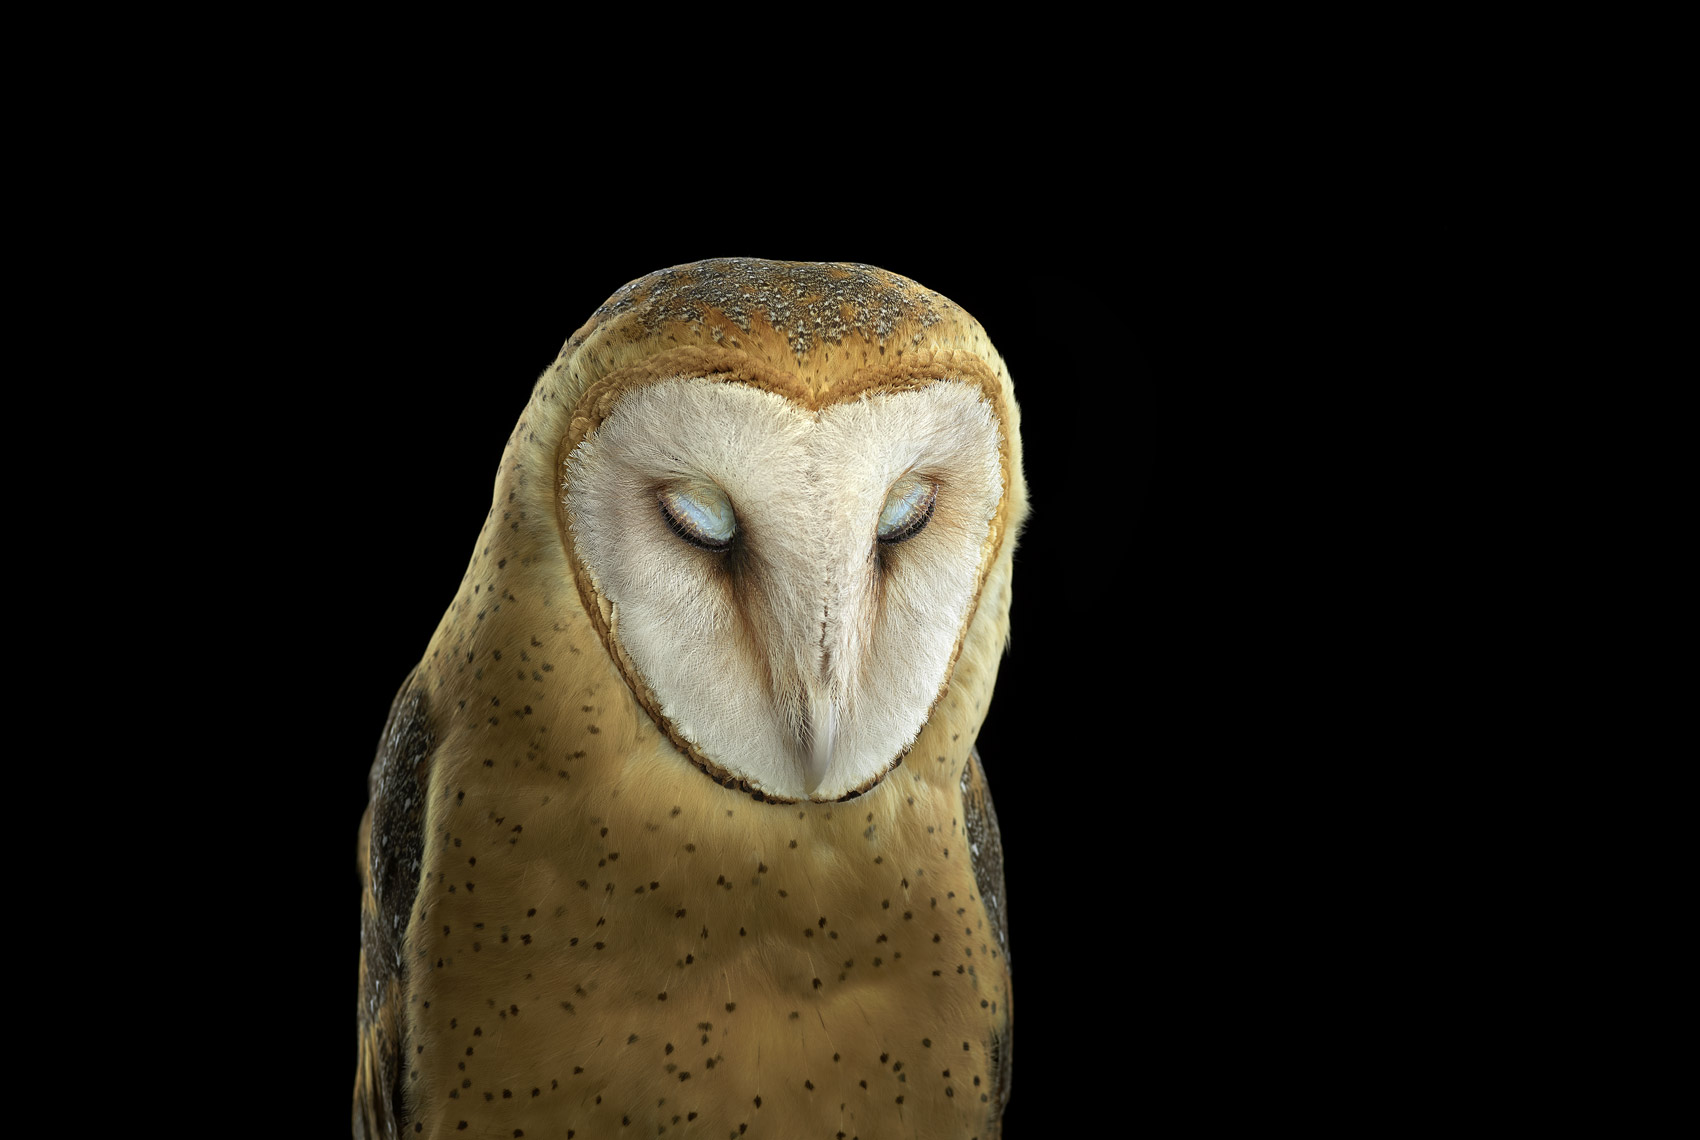 Barn owl with eyes closed by fine art wildlife photographer Brad Wilson